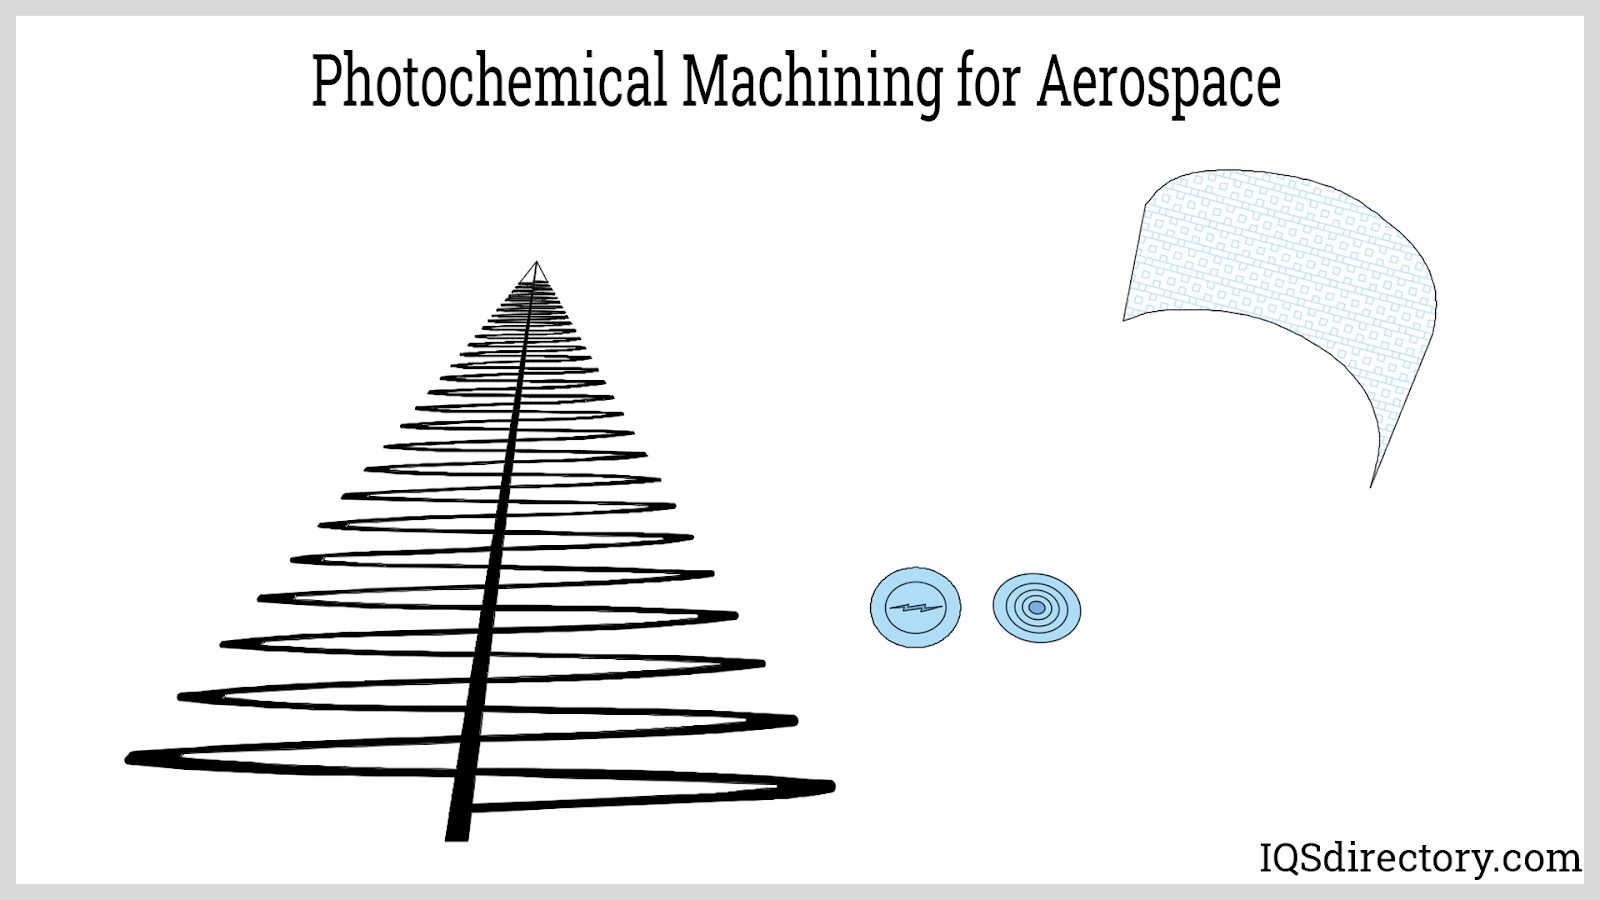 Photochemical Machining for Aerospace